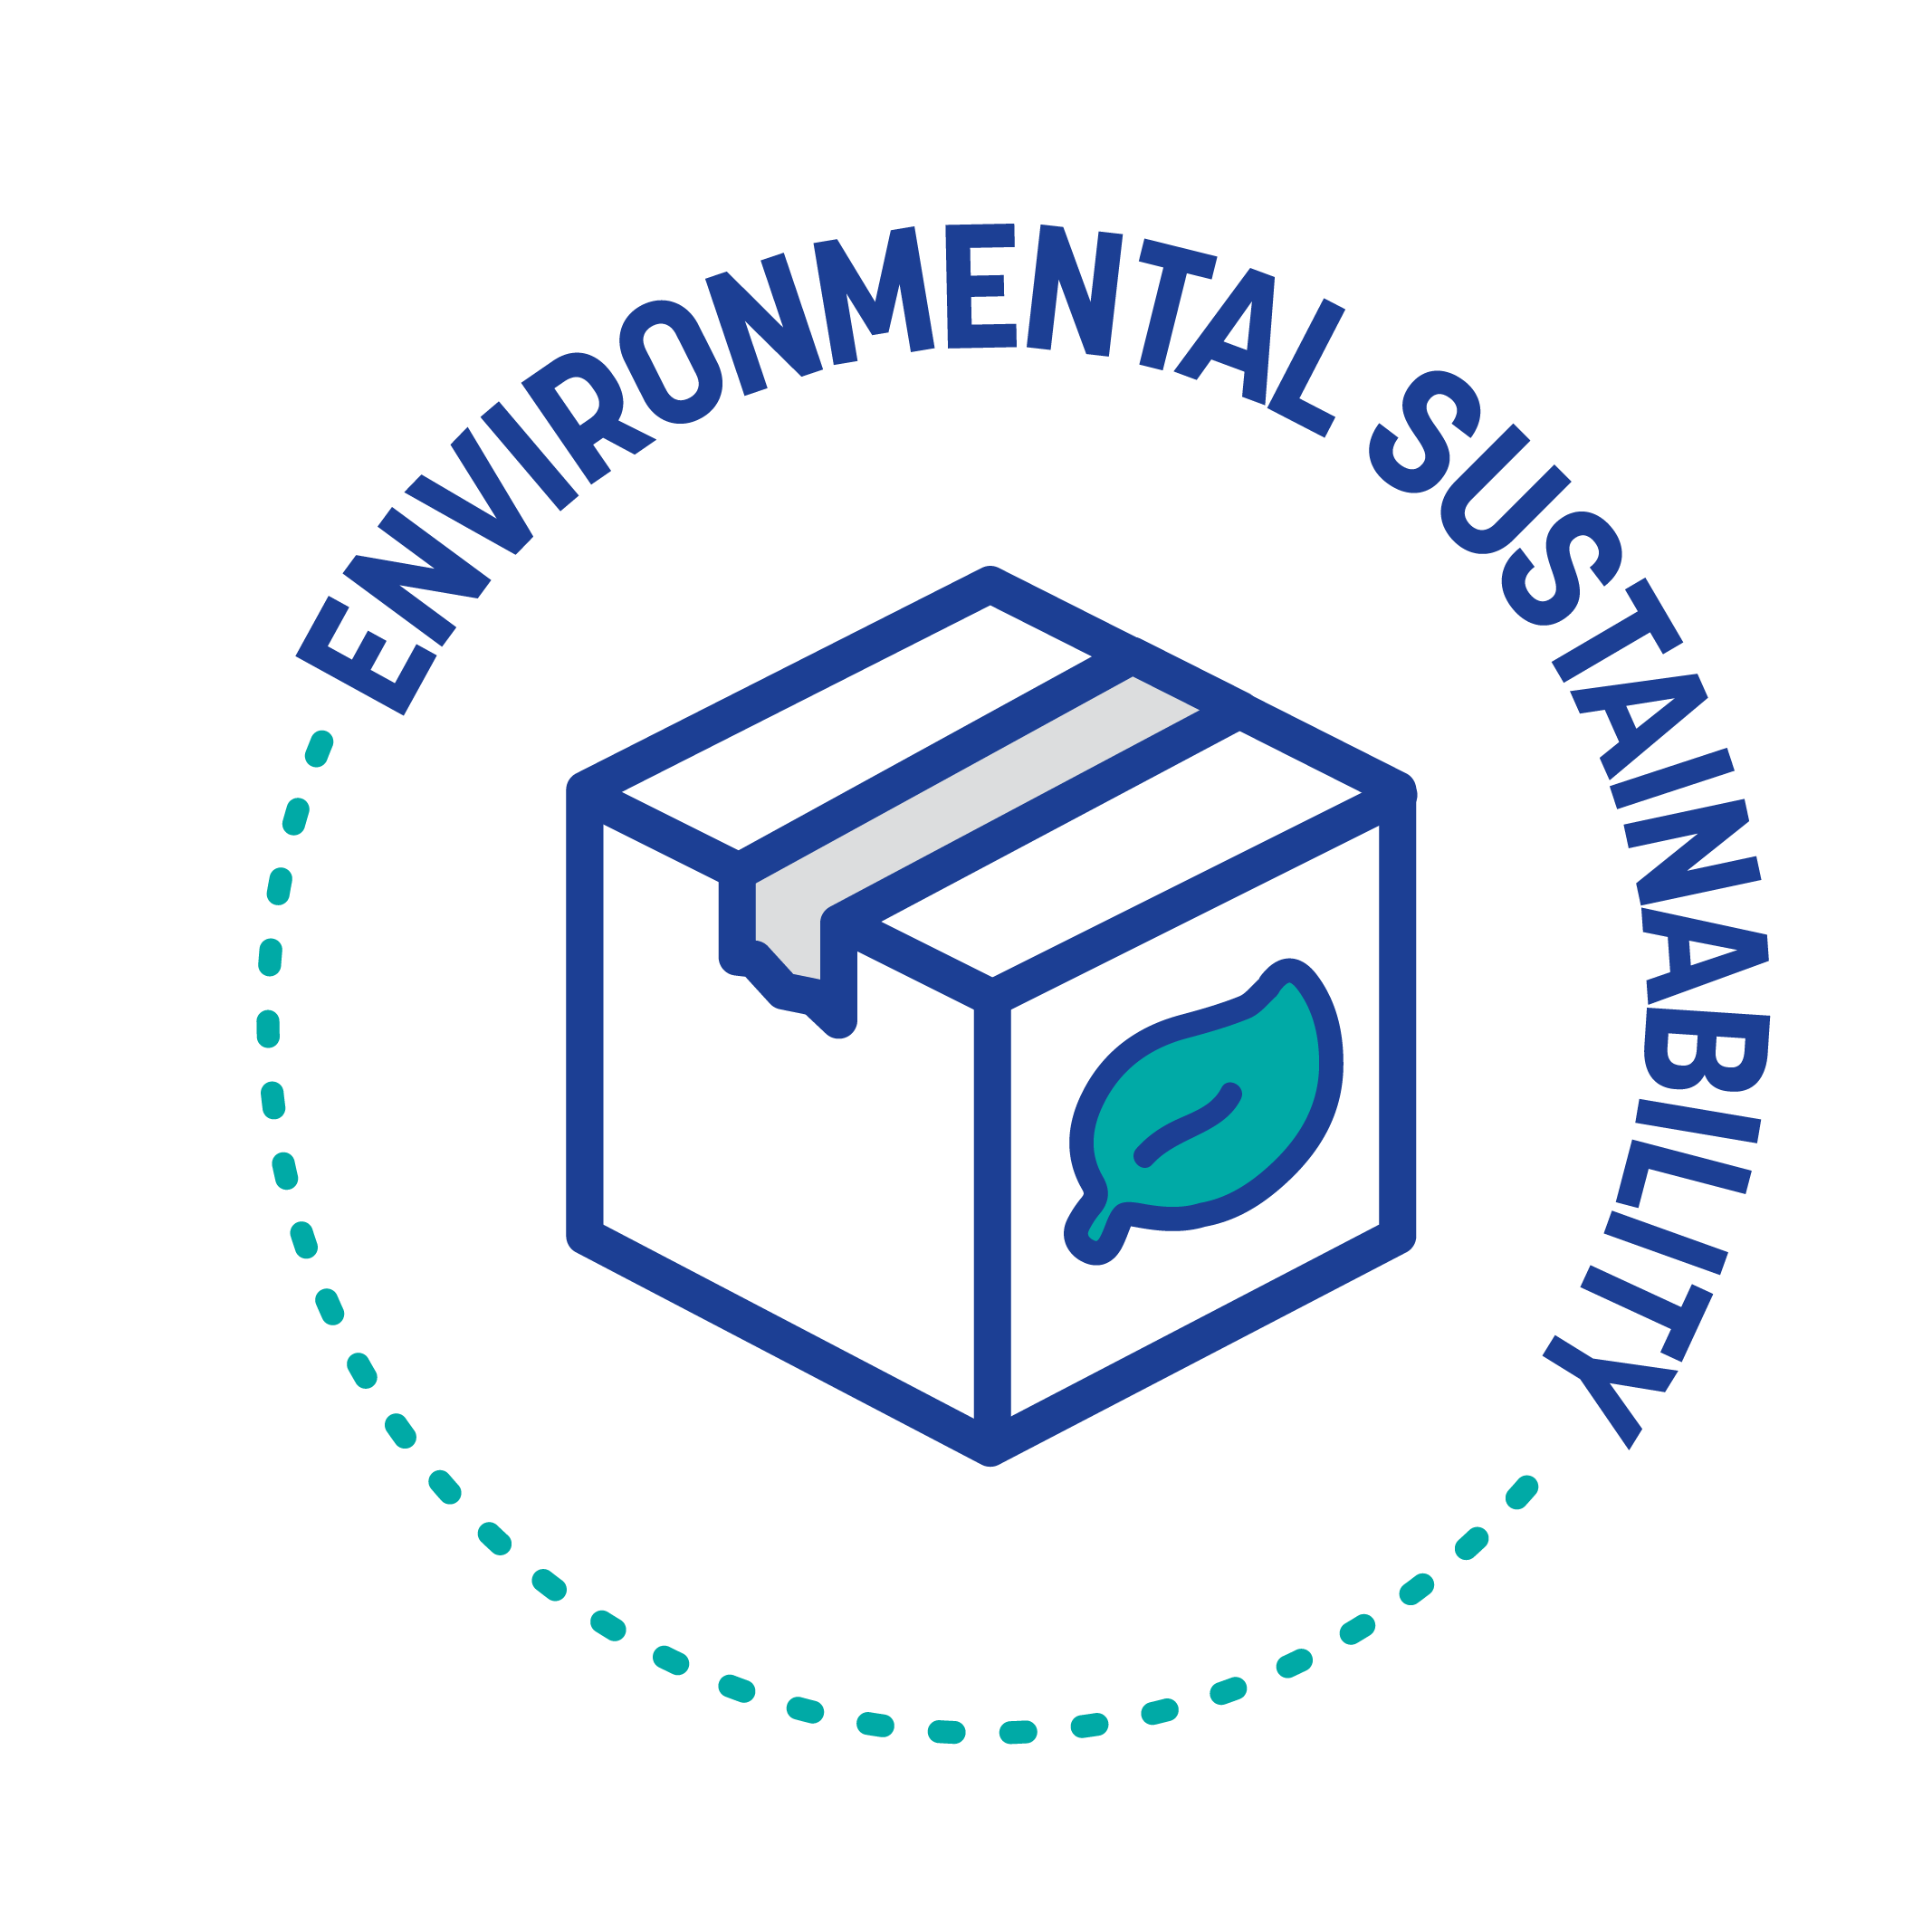 Environmental Sustainability icon.